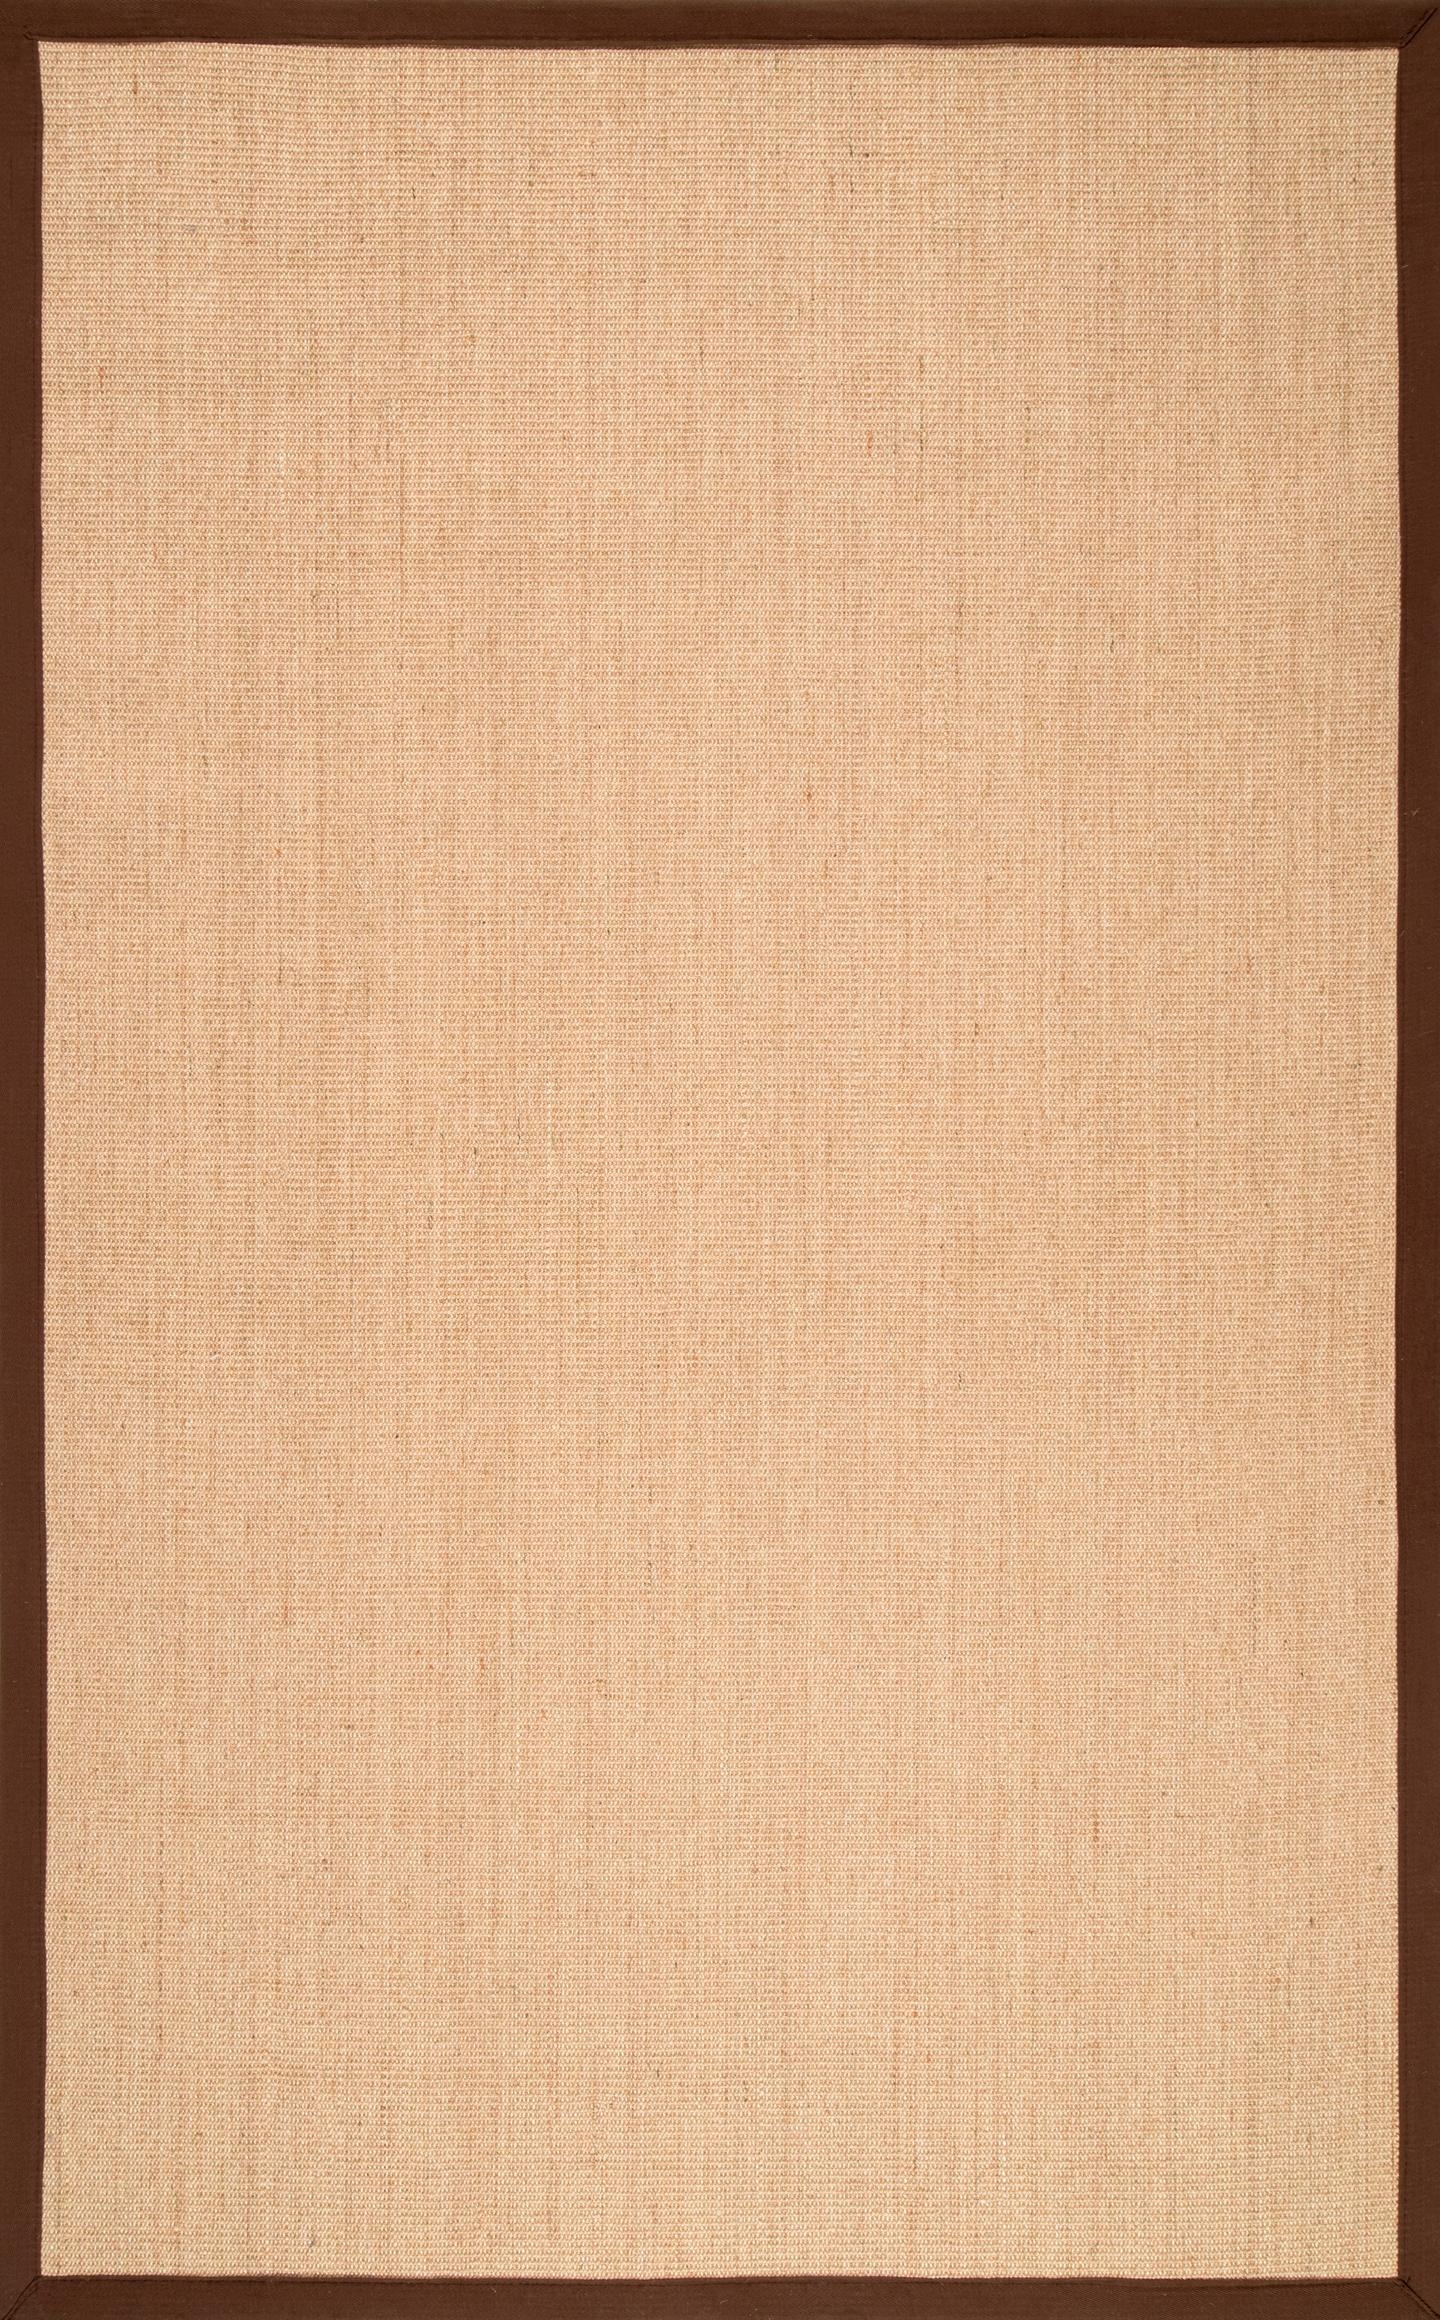  Machine Woven orsay sisal rug Area Rug - Image 1